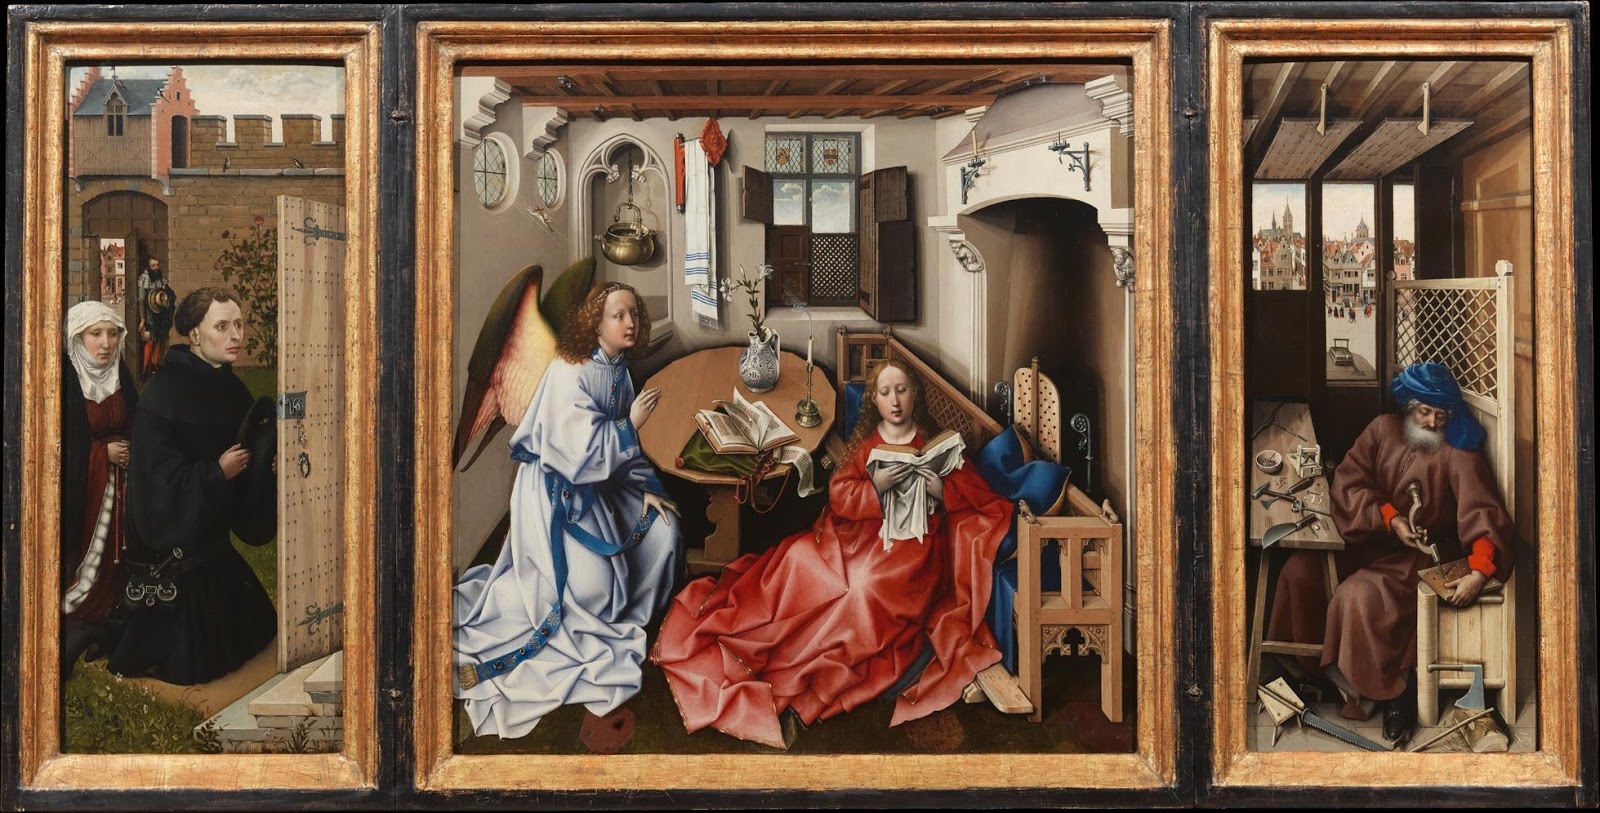 Workshop of Robert Campin, Annunciation Triptych (Merode Altarpiece), 1427-32, Oil on oak